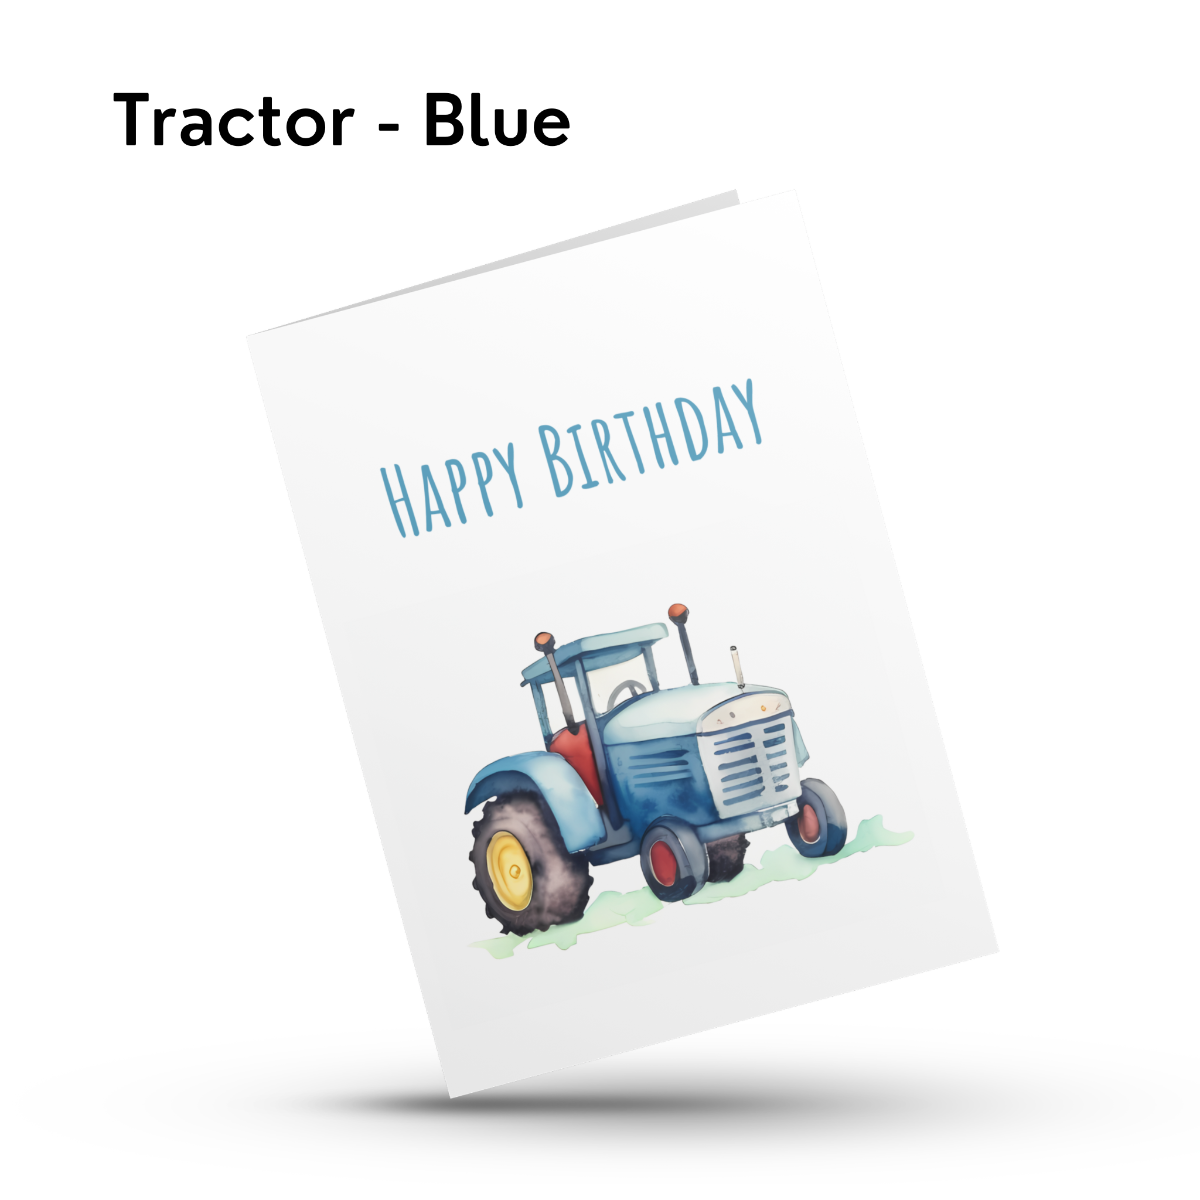 Greeting Cards - Birthday